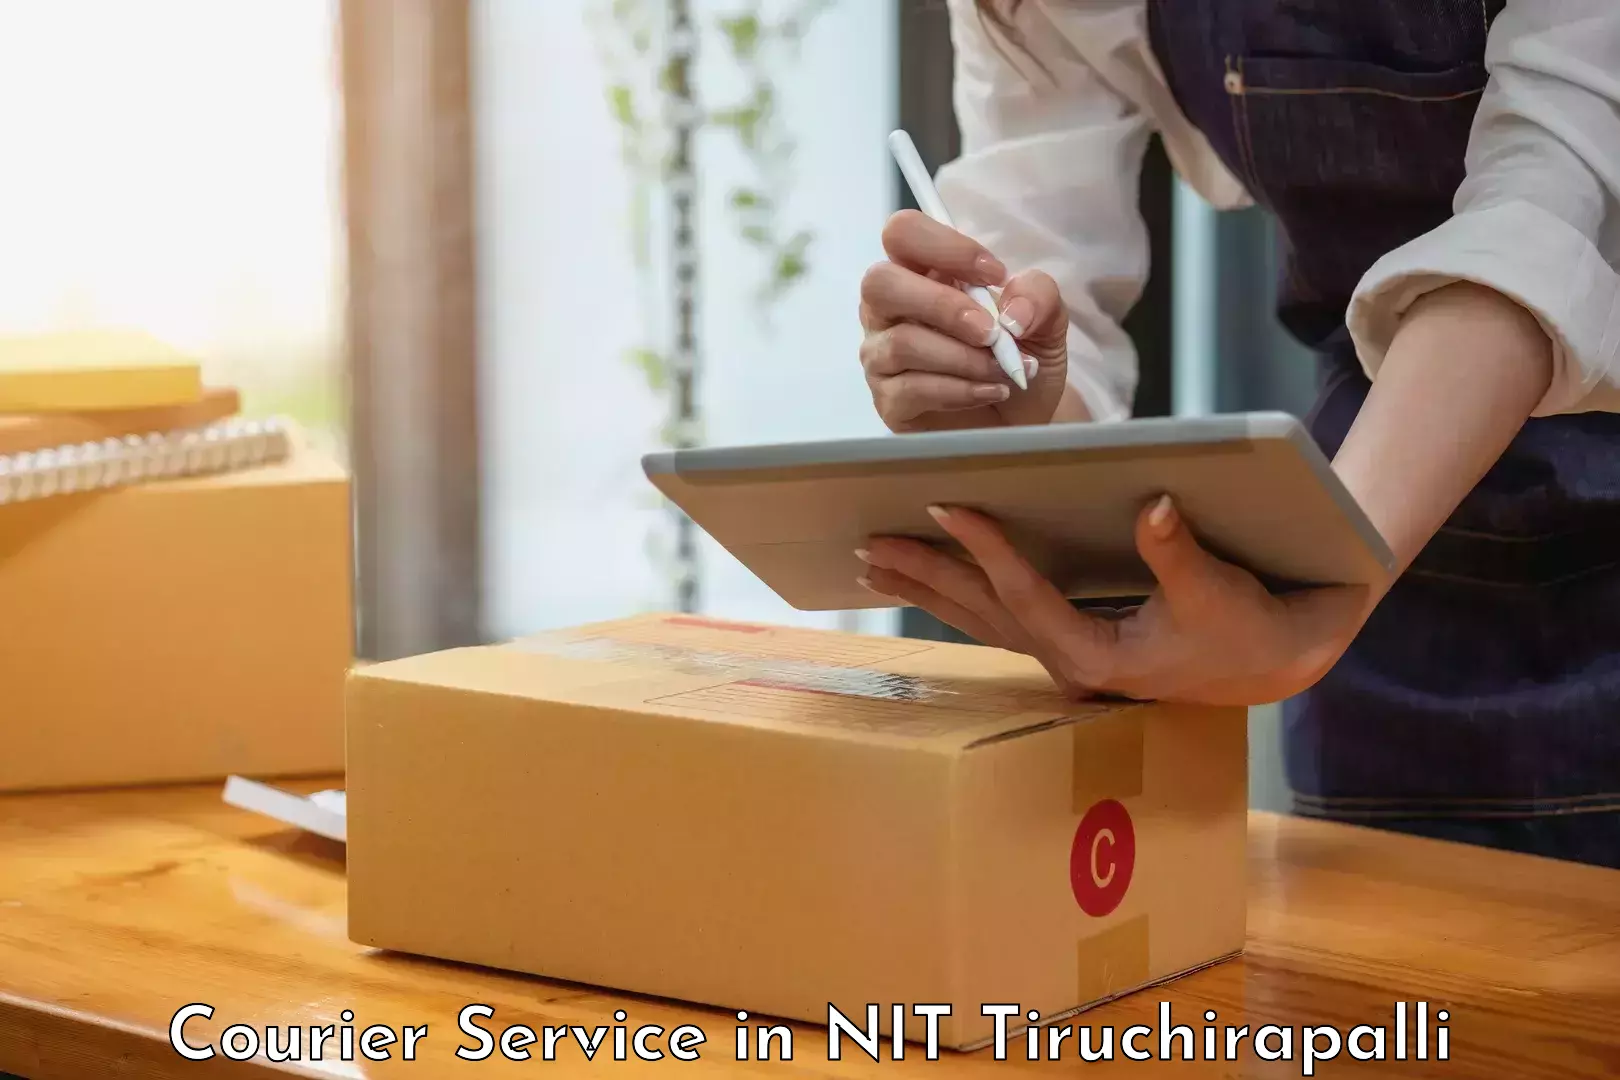 Logistics and distribution in NIT Tiruchirapalli